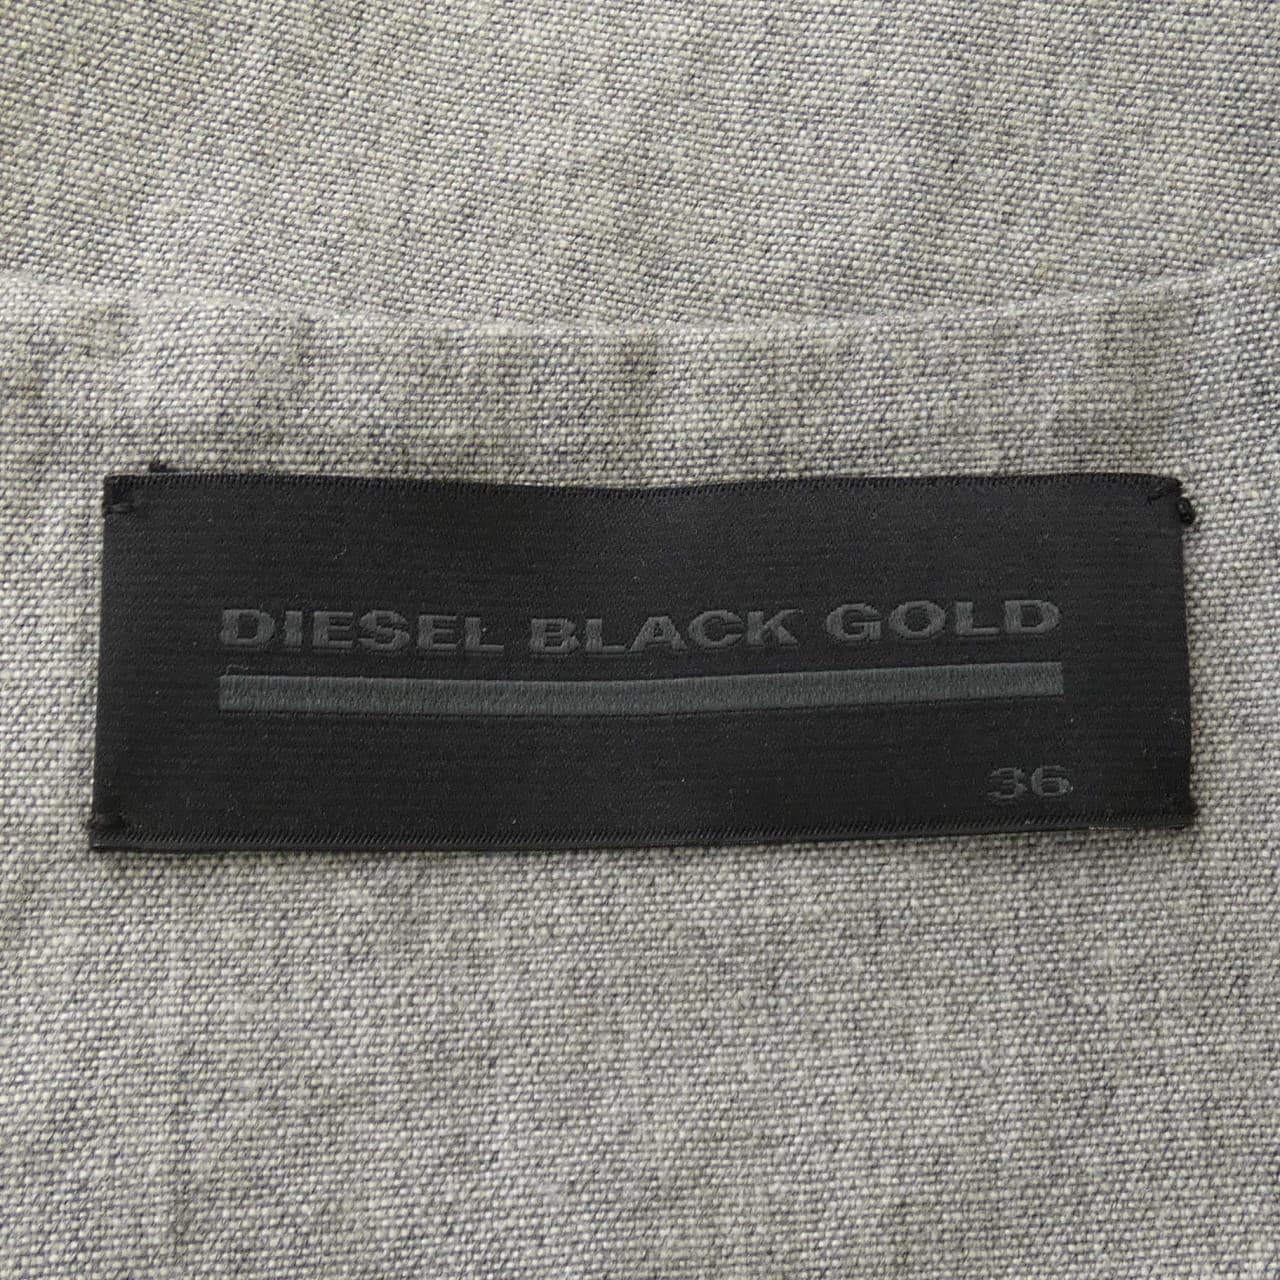 DIESEL BLACK GOLD Tunic